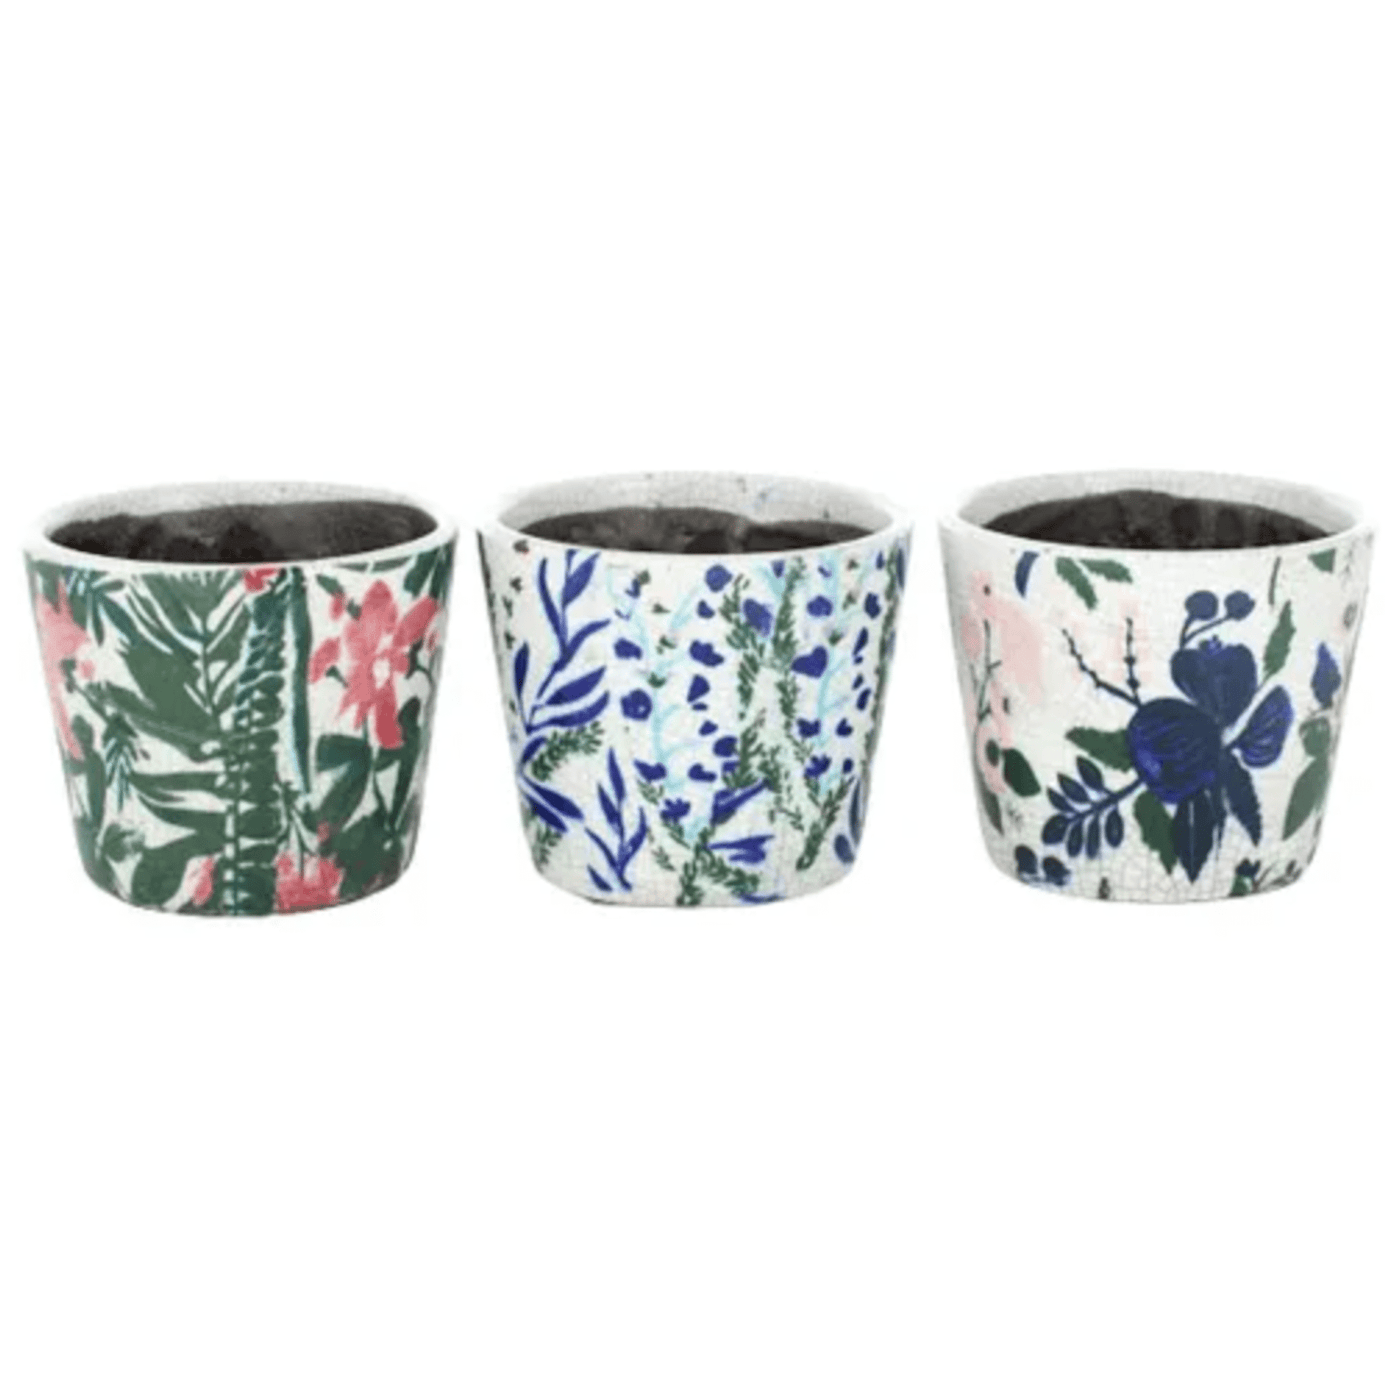 Flor Ceramic Pots